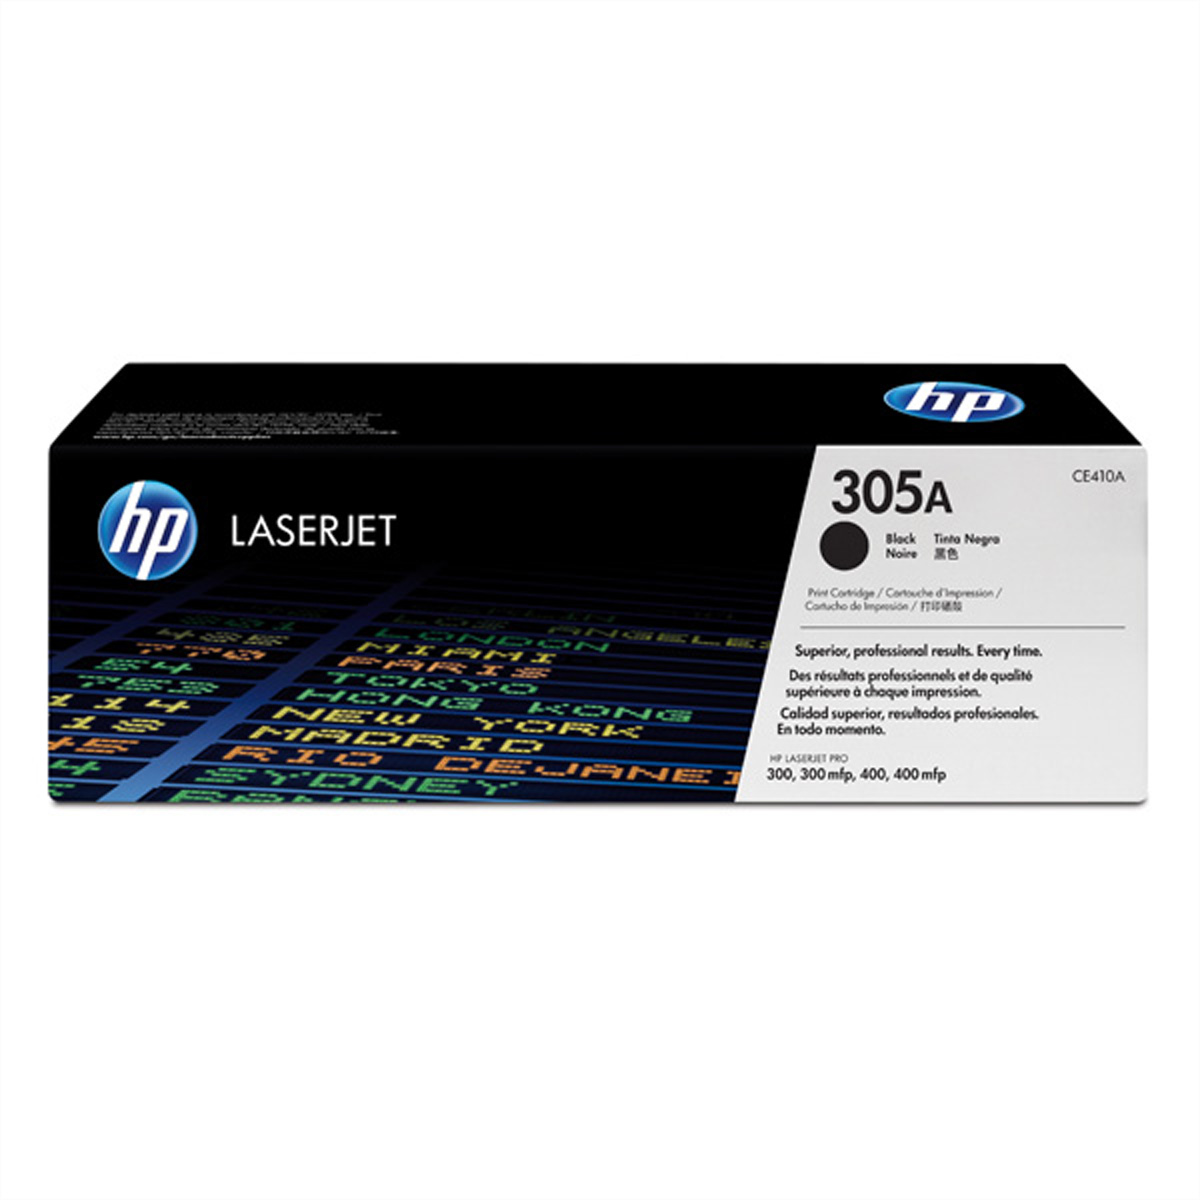 CE410A, HP Color LaserJet Druckkassette schwarz, Nr. 305A, ca. 2.200 Seiten, für HP LaserJet Pro 300 Color M351a / LaserJet Pro 300 Color MFP M375nw / LaserJet Pro 400 Color M451 / LaserJet Pro 400 Color MFP M475